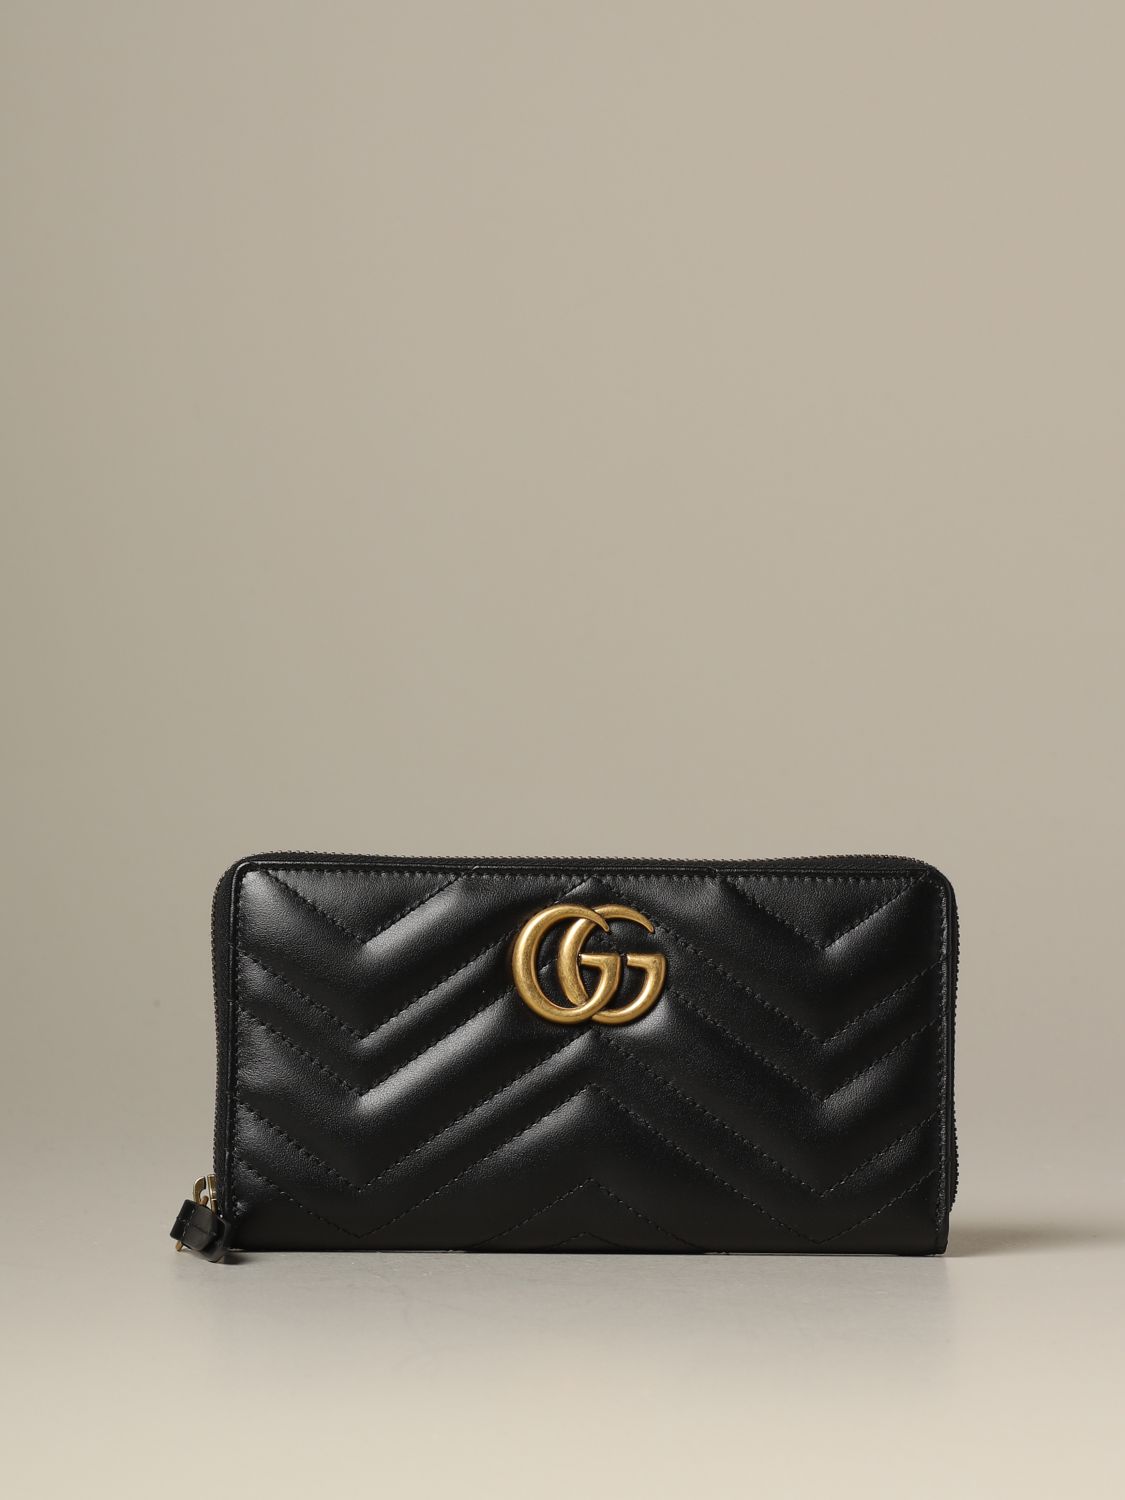 formula reform Grape GUCCI: Marmont wallet in matelassé leather - Black | Gucci wallet 443123  DTD1T online on GIGLIO.COM